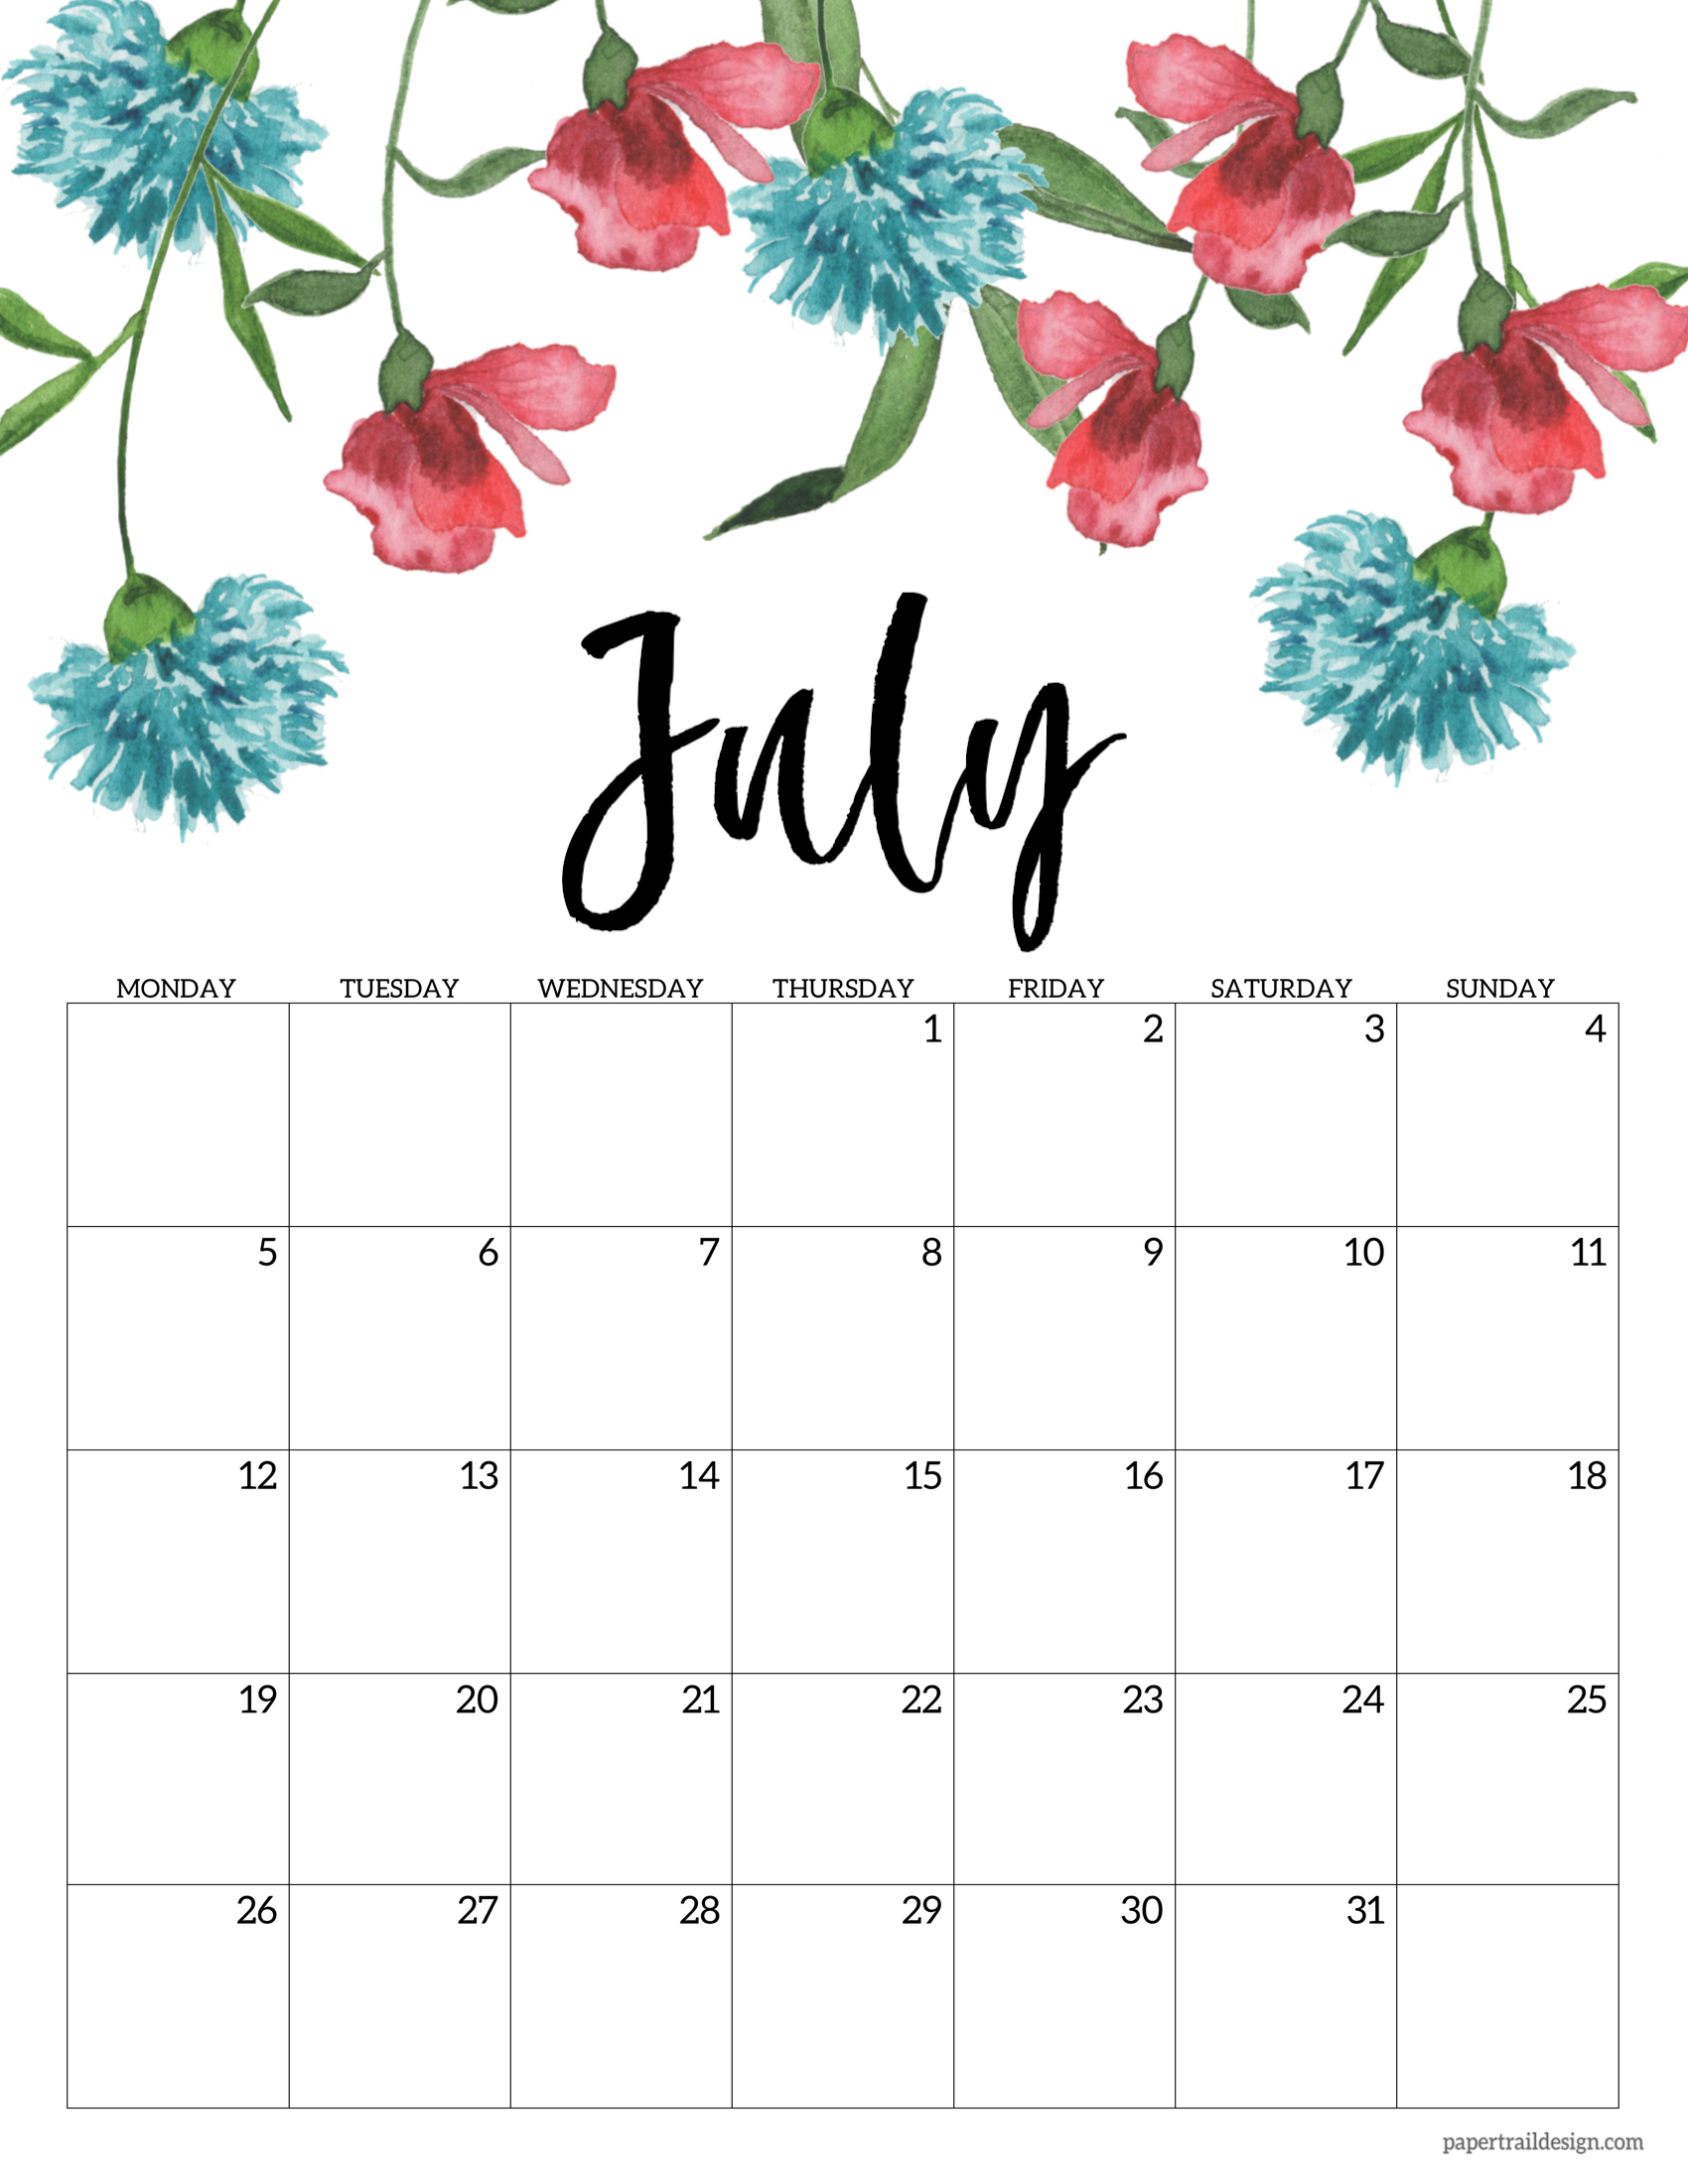 Free Printable 2021 Floral Calendar - Monday Start | Paper